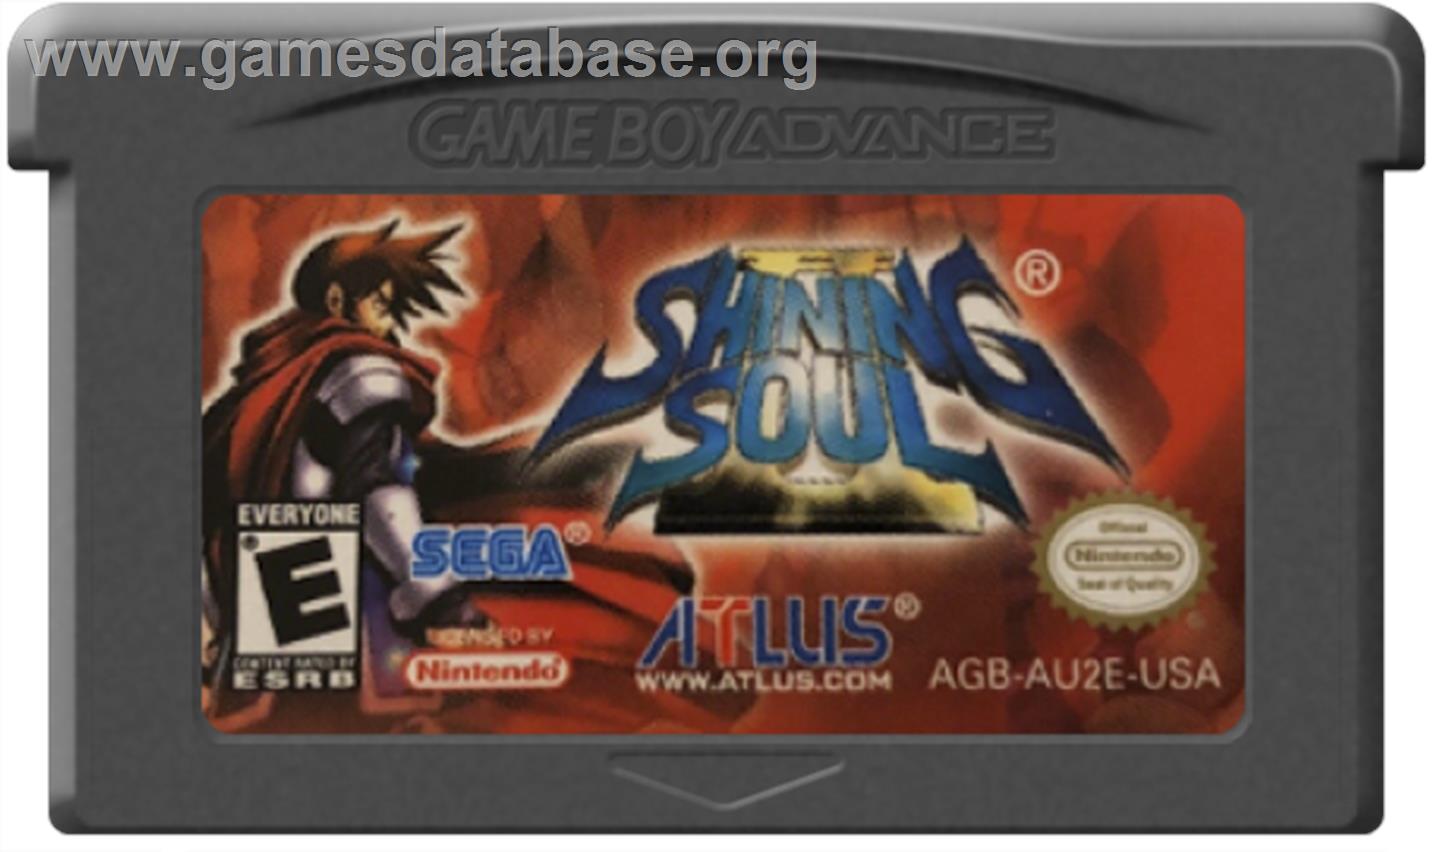 Shining Soul 2 - Nintendo Game Boy Advance - Artwork - Cartridge